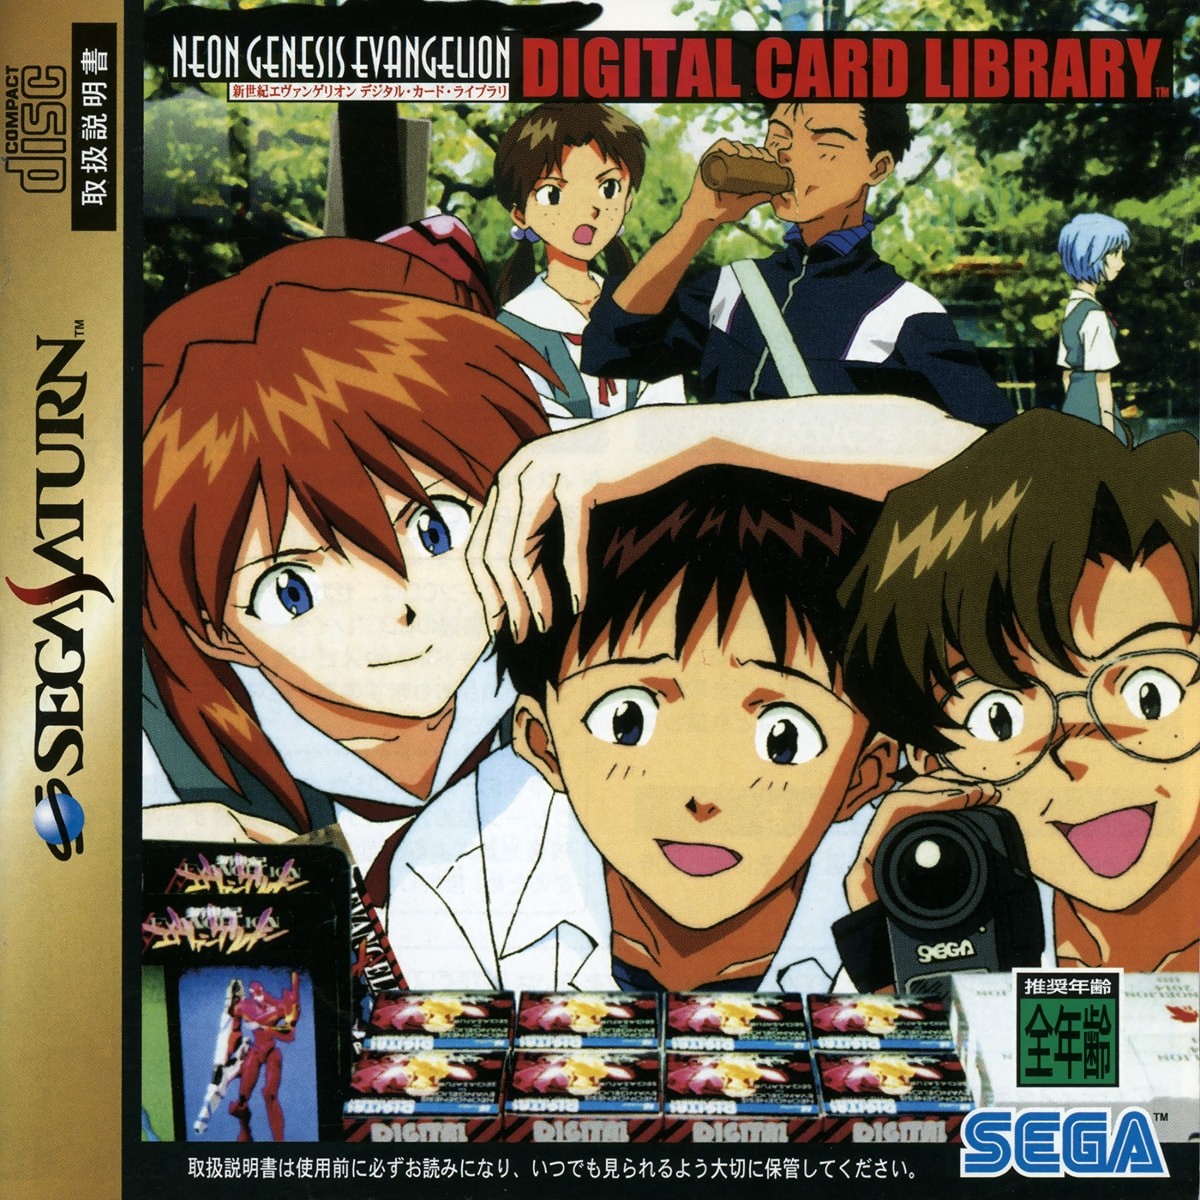 Capa do jogo Shinseiki Evangelion: Digital Card Library